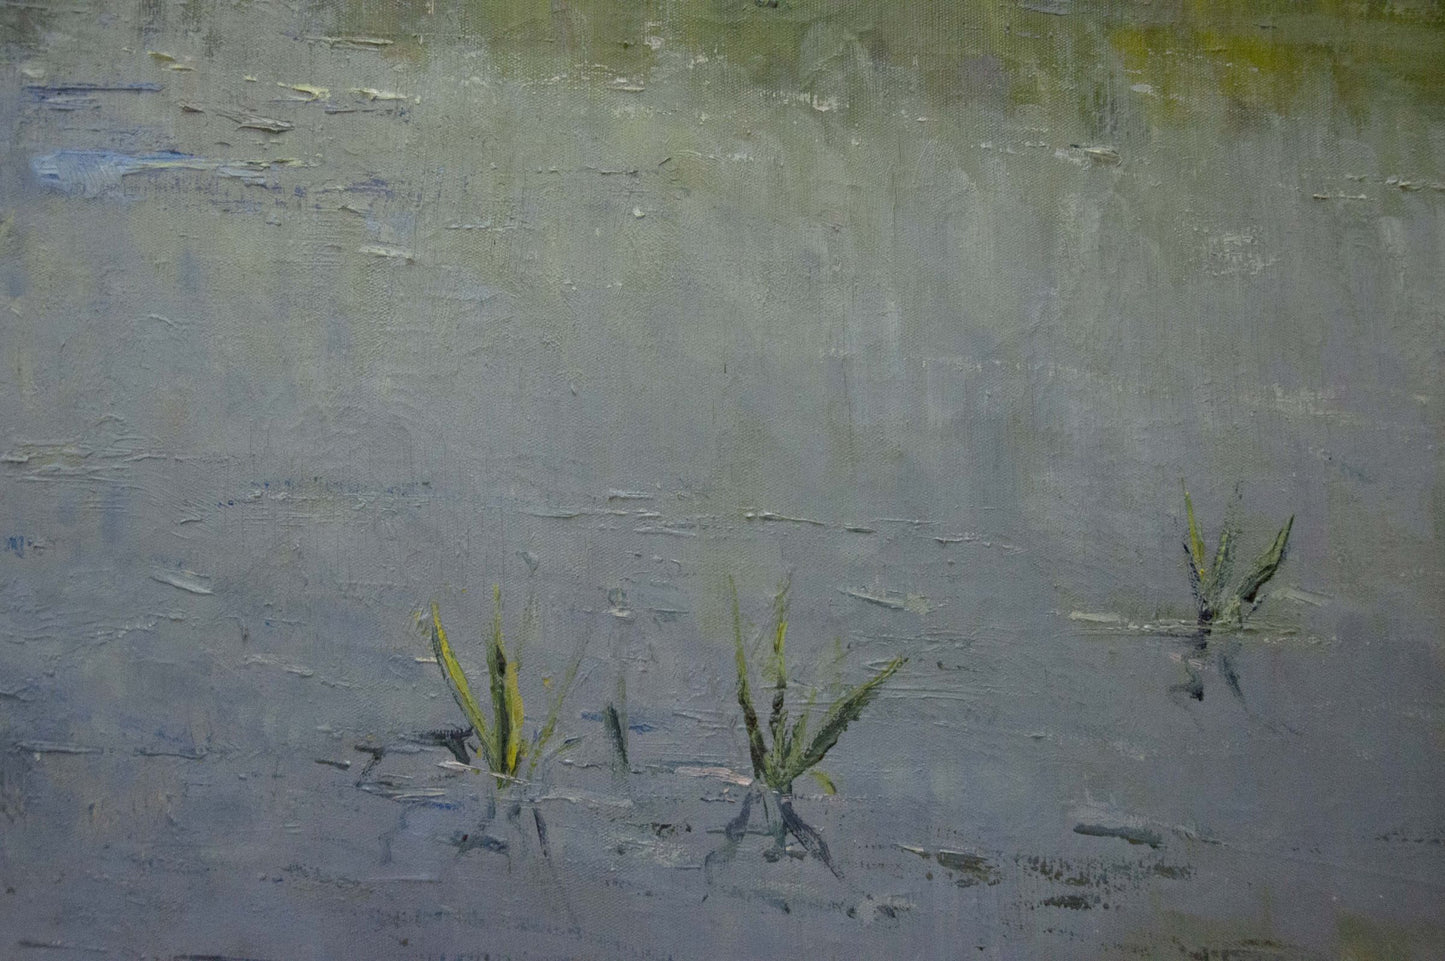 Oil painting Summer landscape Nepiypivo Vasily Ignatievich